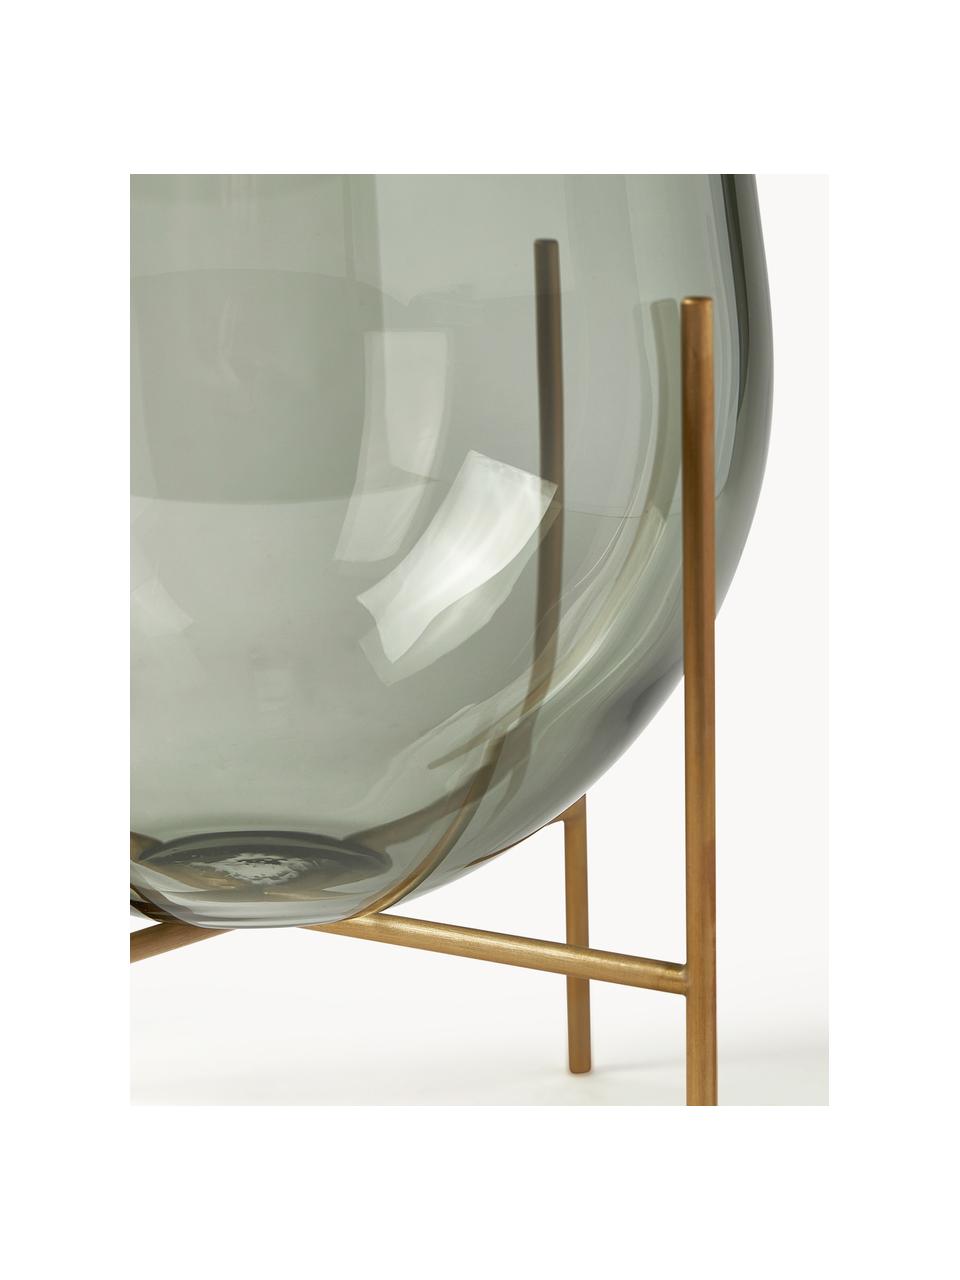 Mundgeblasene Bodenvase Échasse, H 44 cm, Gestell: Messing, Vase: Glas, mundgeblasen, Olivgrün, transparent, Ø 22 x H 44 cm